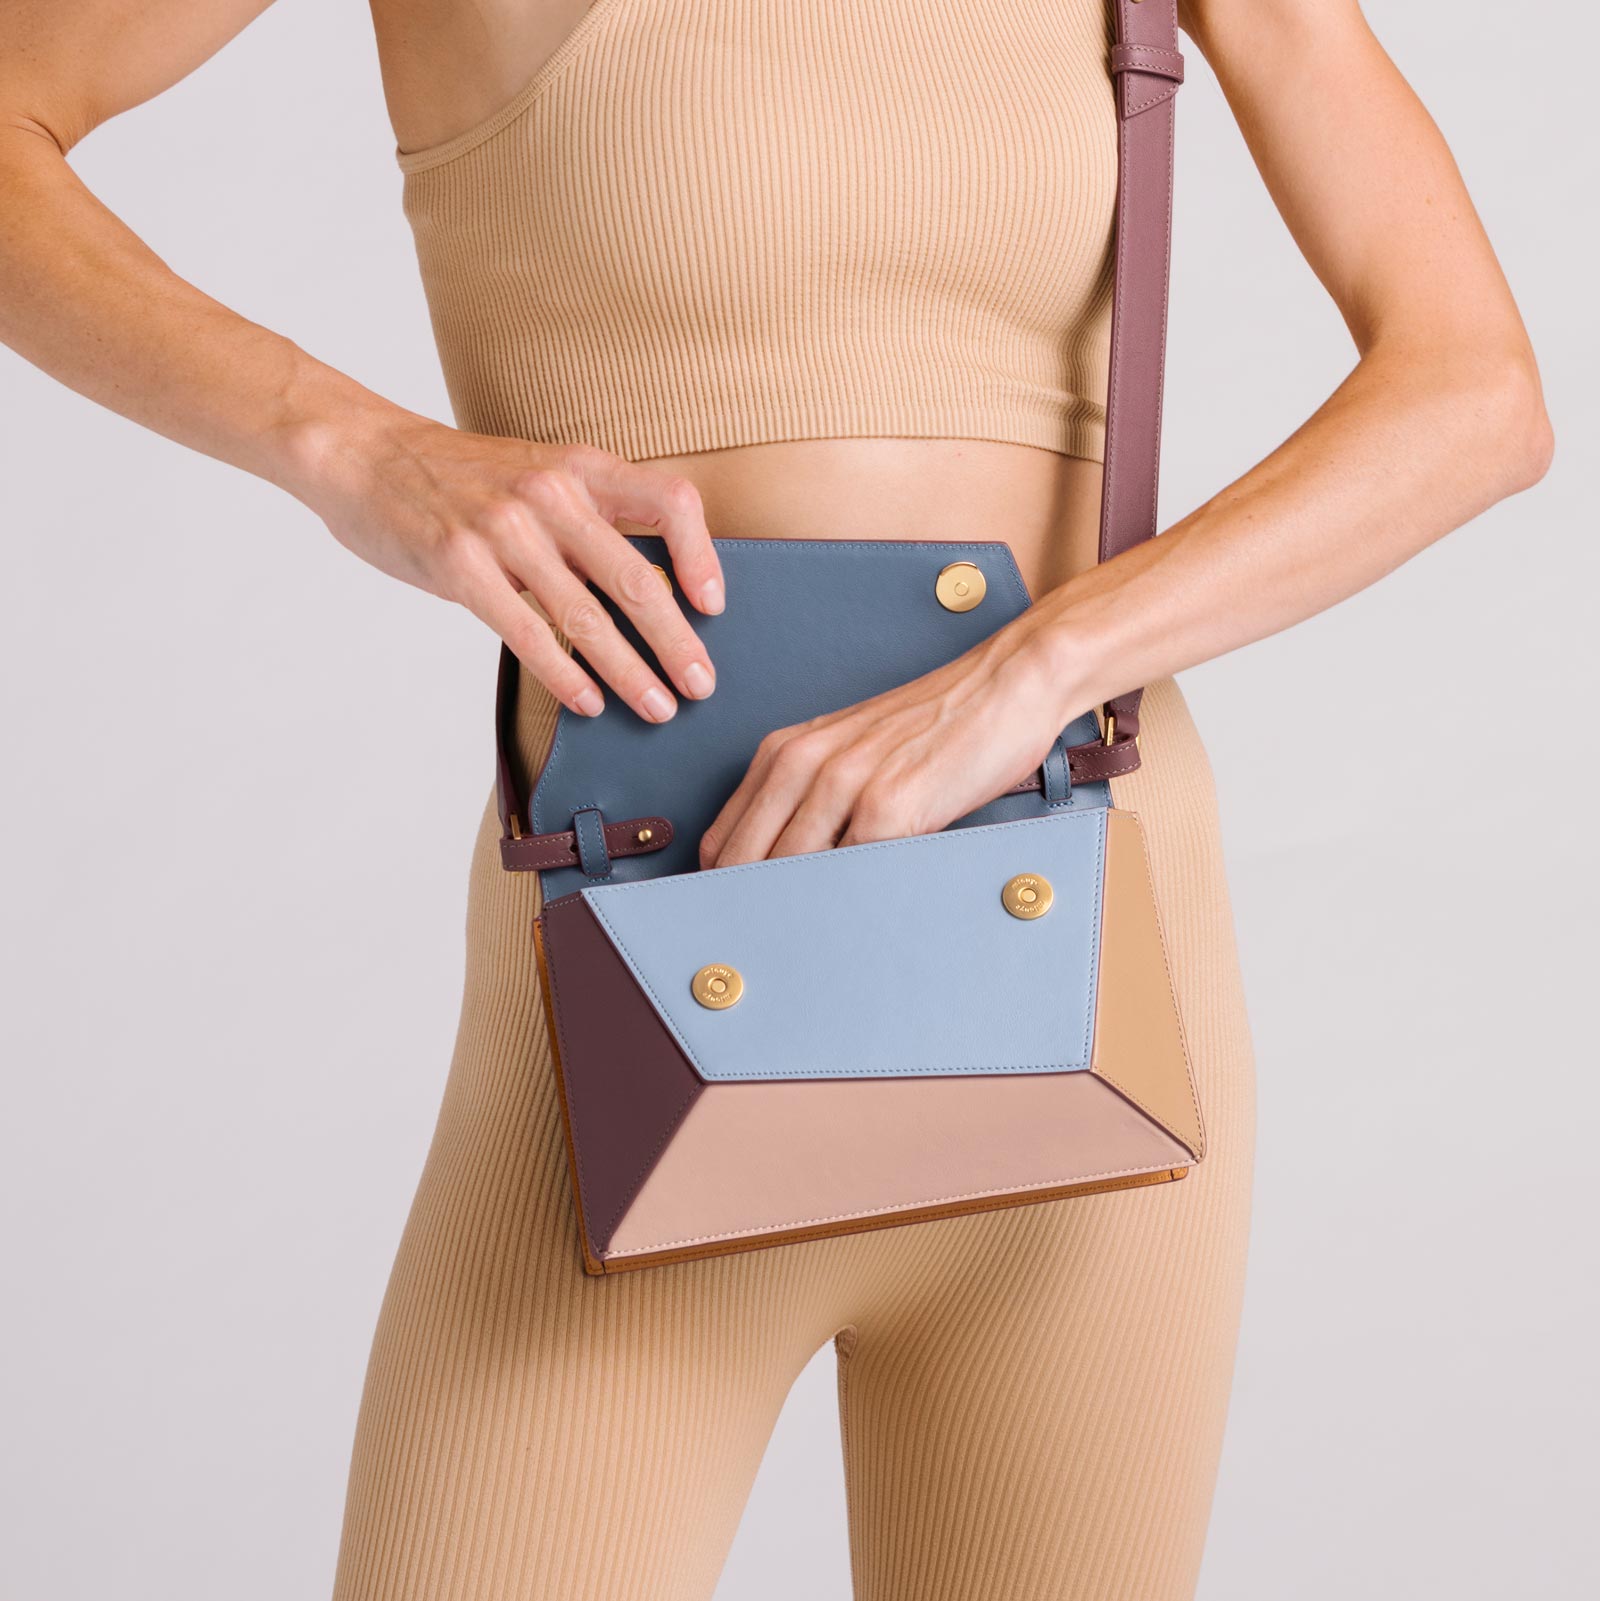 Naomi south america bag, Mlouye Luxury designer Bag